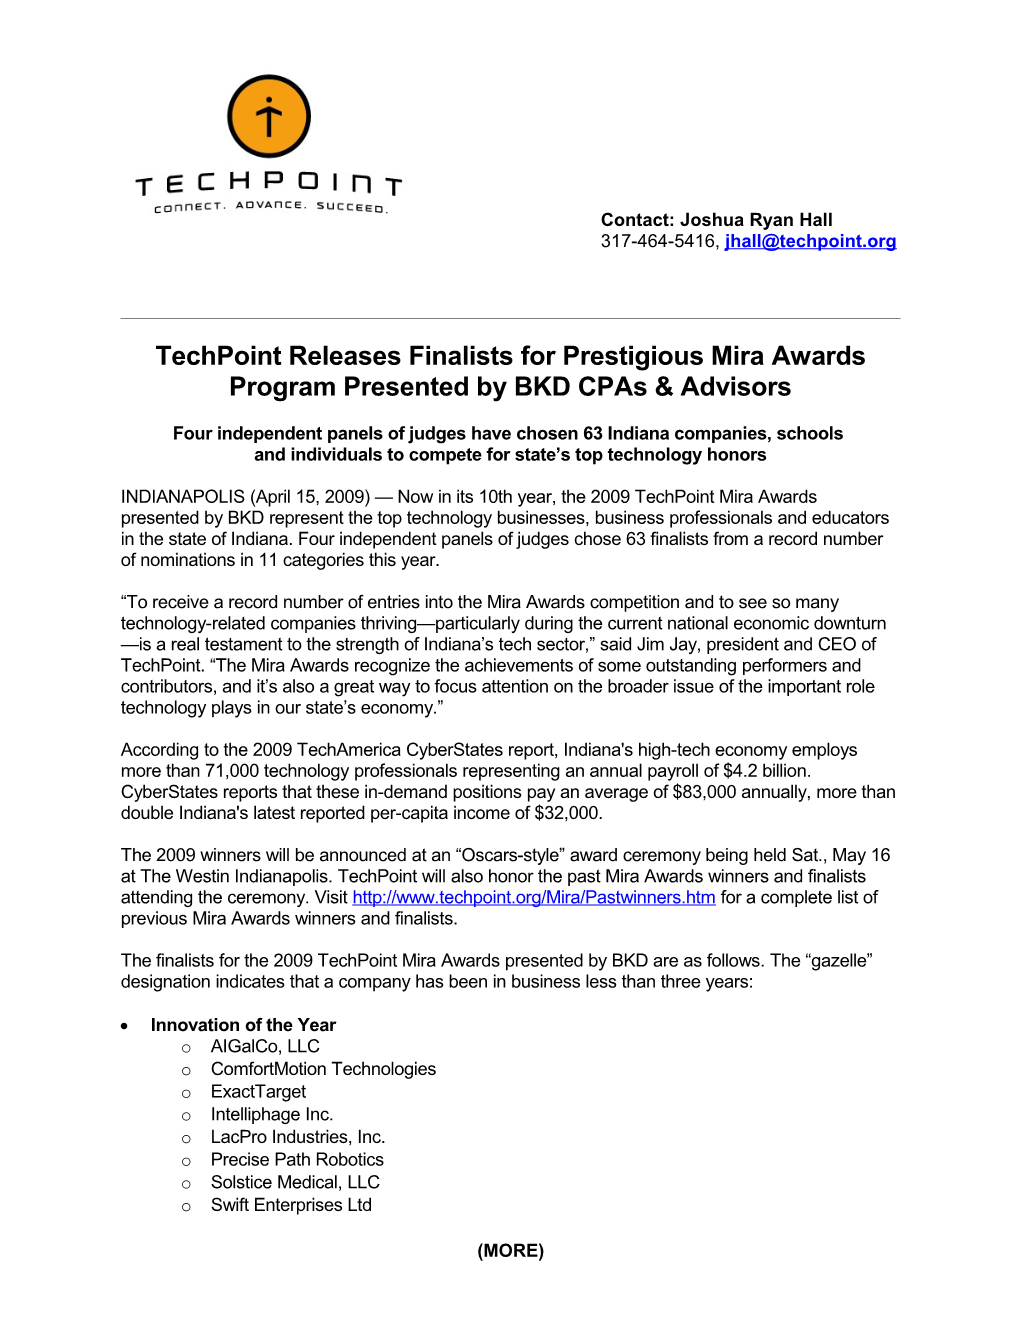 2009 Techpoint Mira Awards Finalists